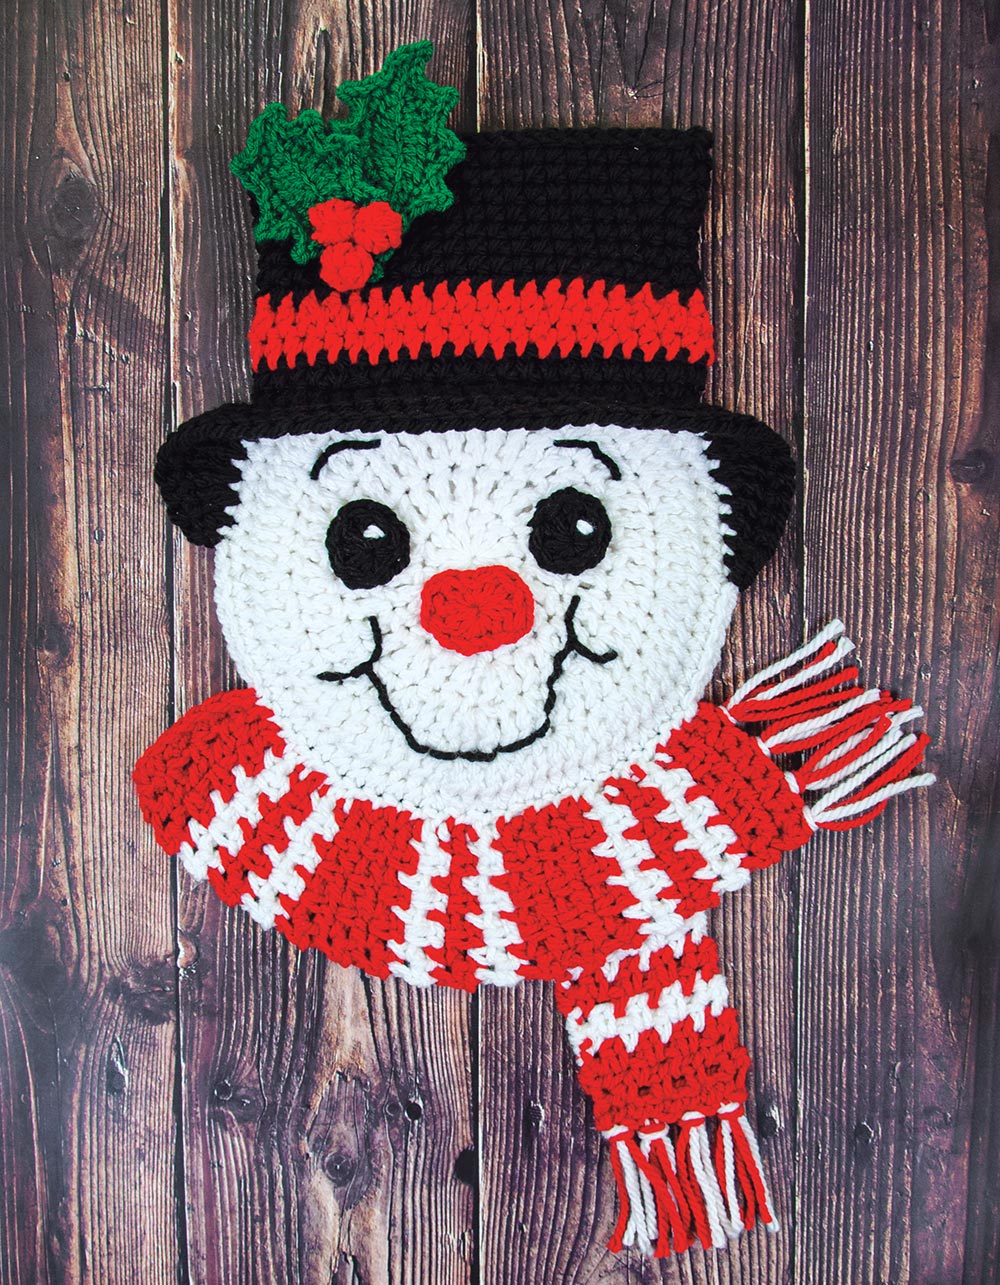 Mini Crochet Kit, Hanging Heart Ornament